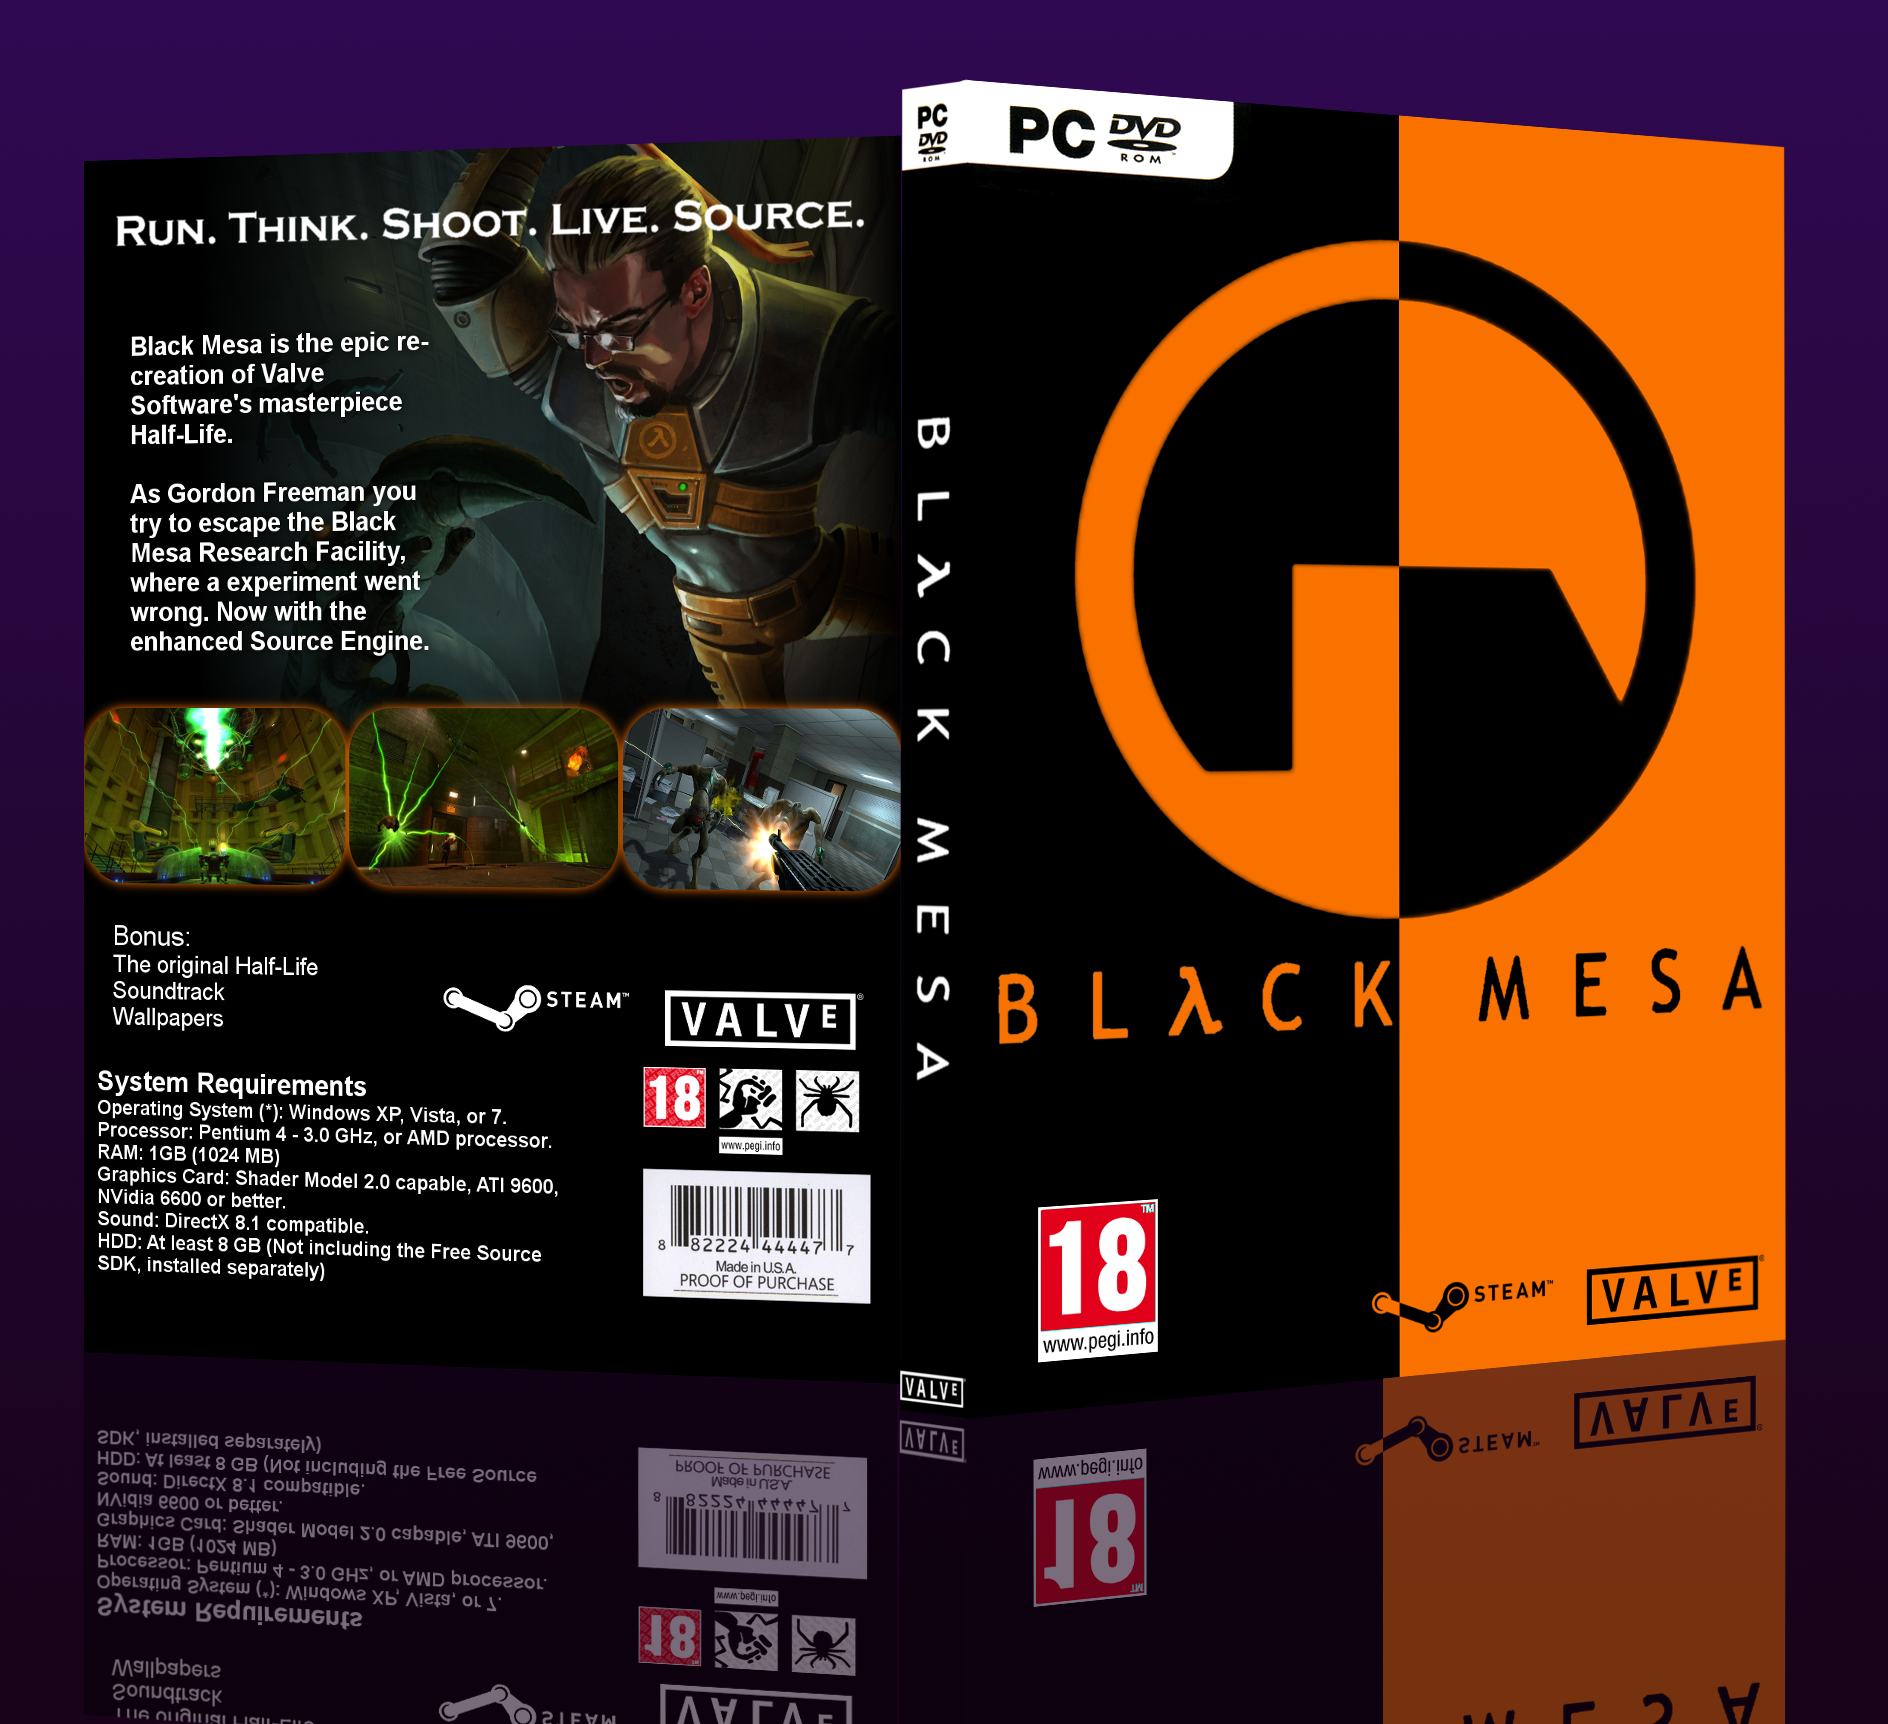 Black Mesa: Source box cover